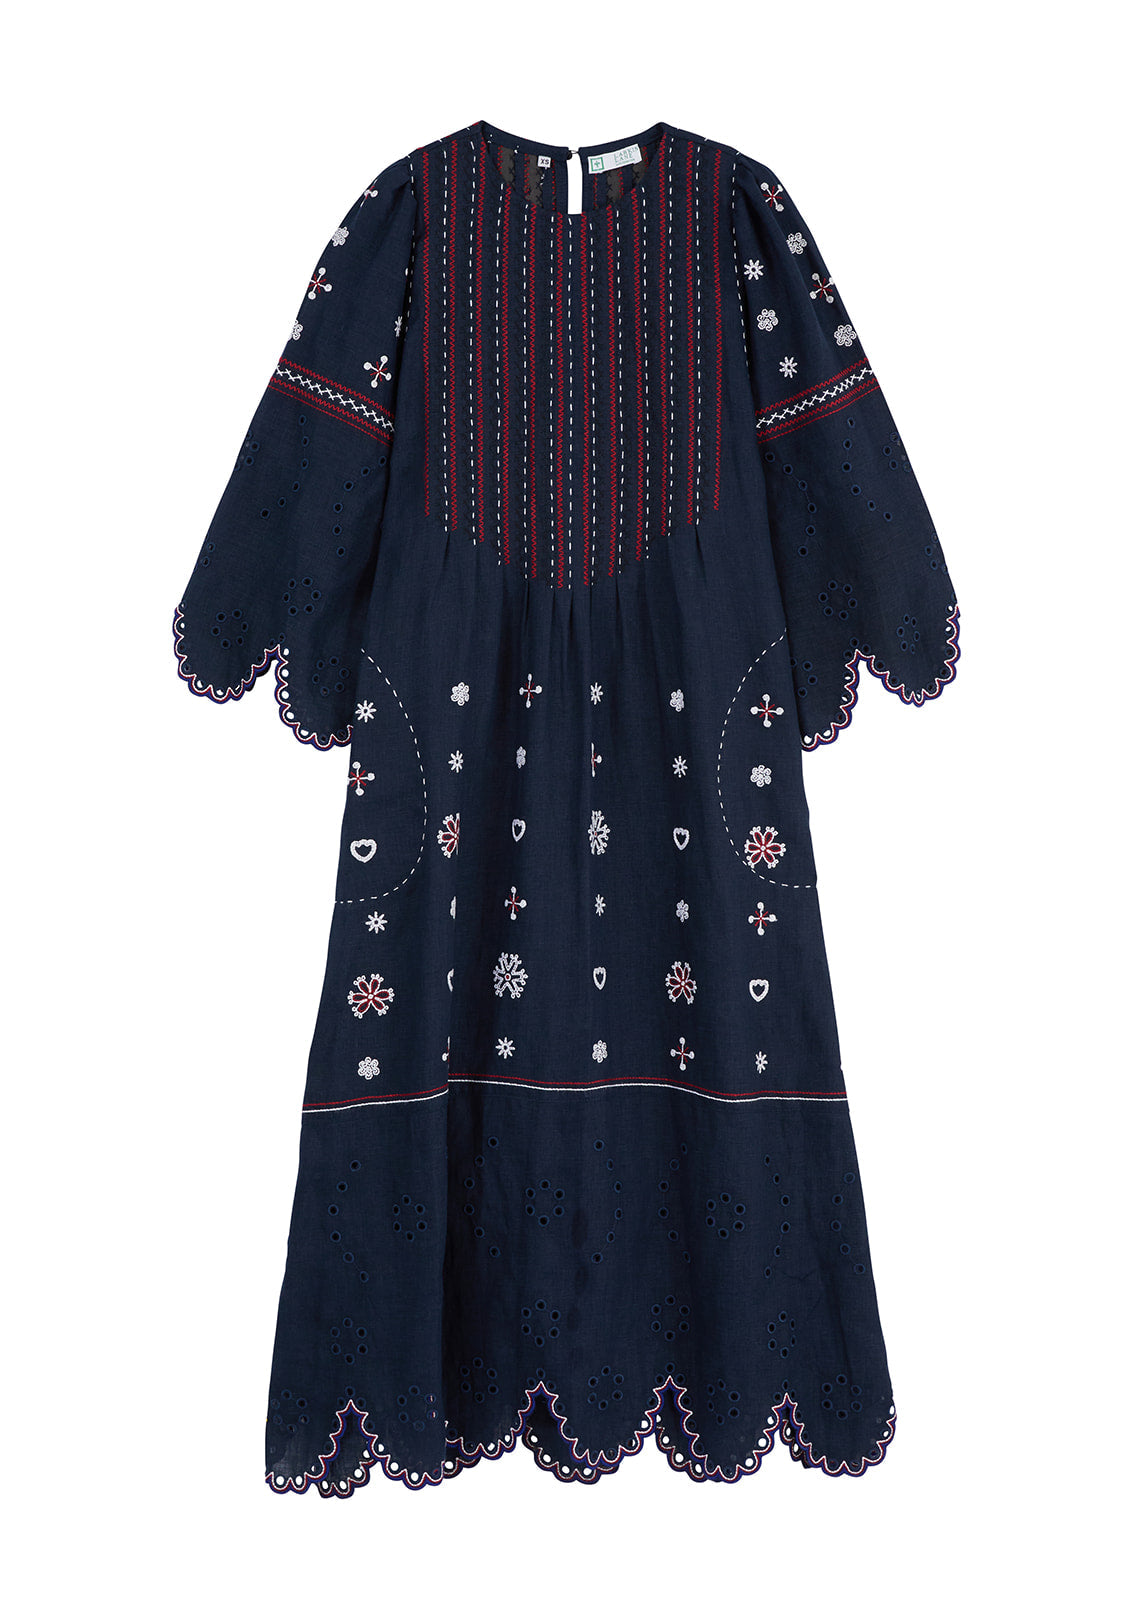 Maryna Embroidered Ukrainian Dress - Deep Navy, Red, White by Larkin Lane